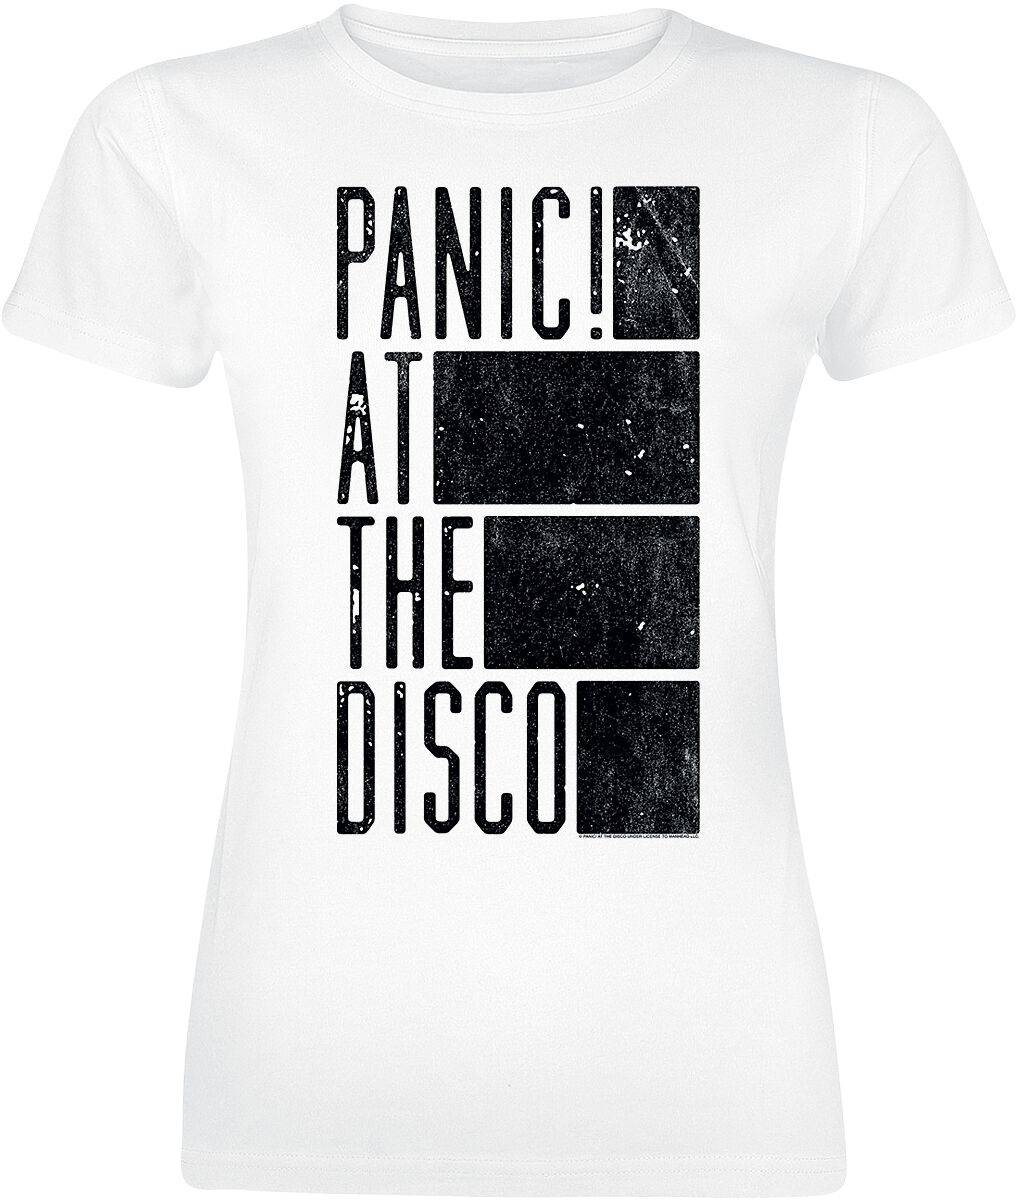 Panic! At The Disco Block Text T-Shirt white